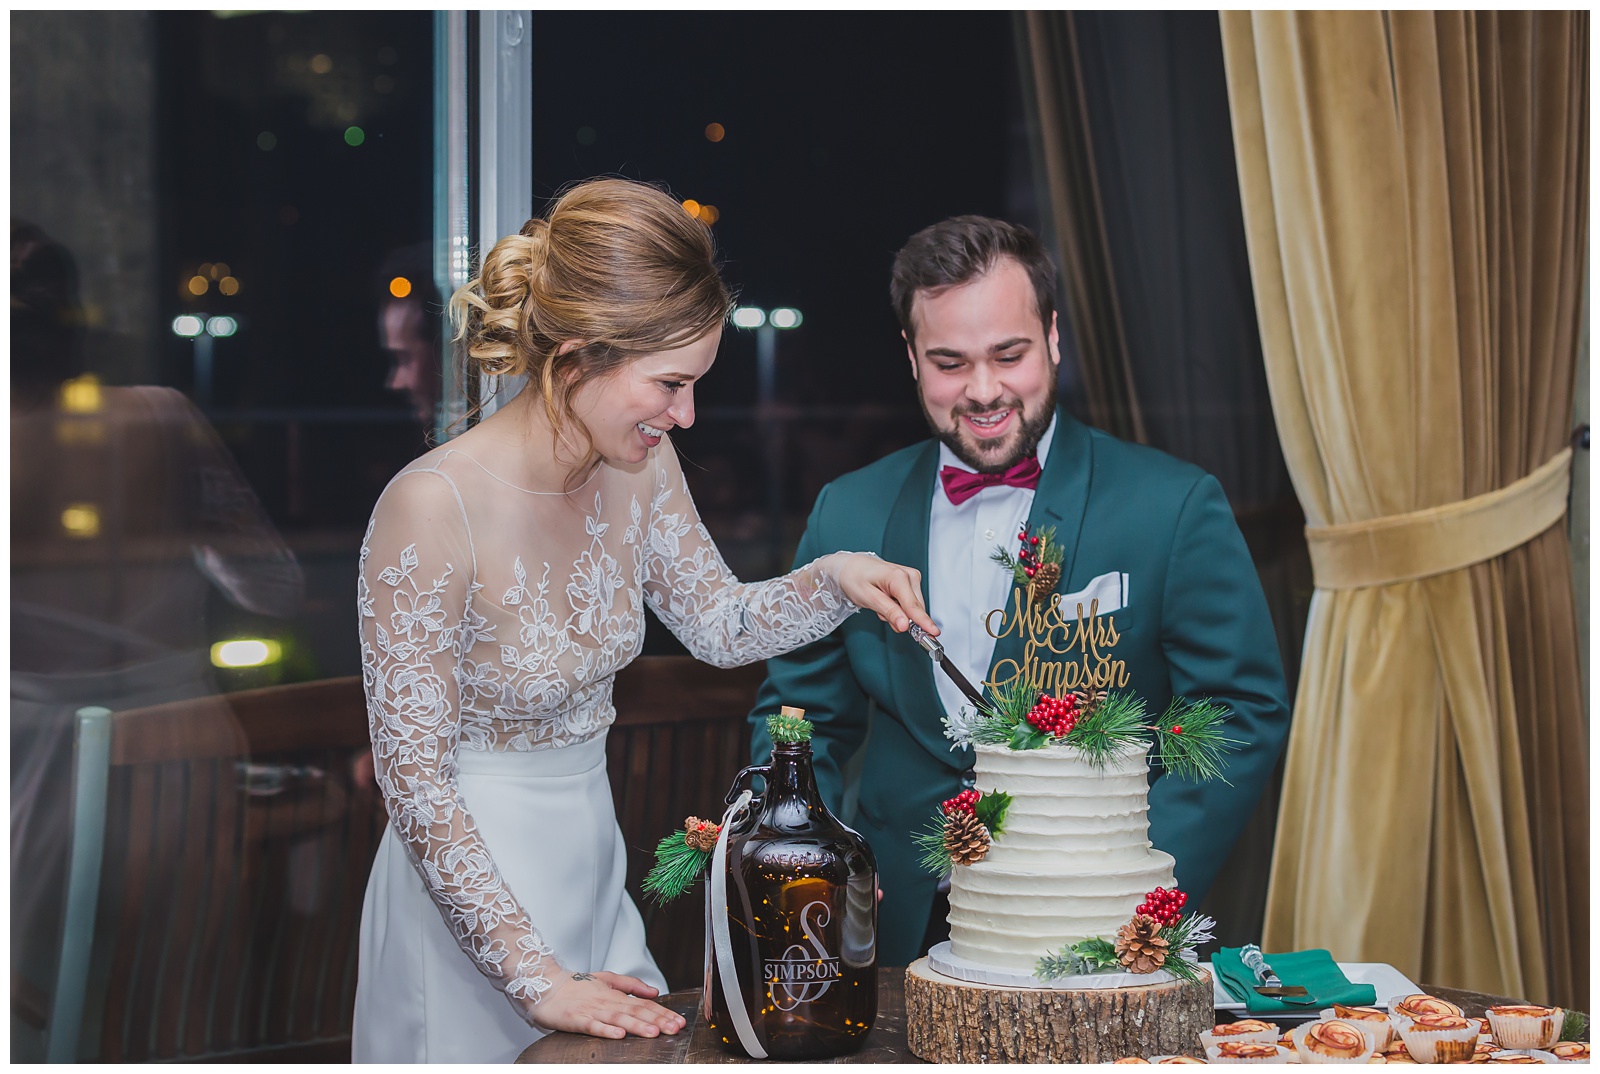 Wedding photography at Boulevard Brewing Company by Kansas City wedding photographers Wisdom-Watson Weddings.